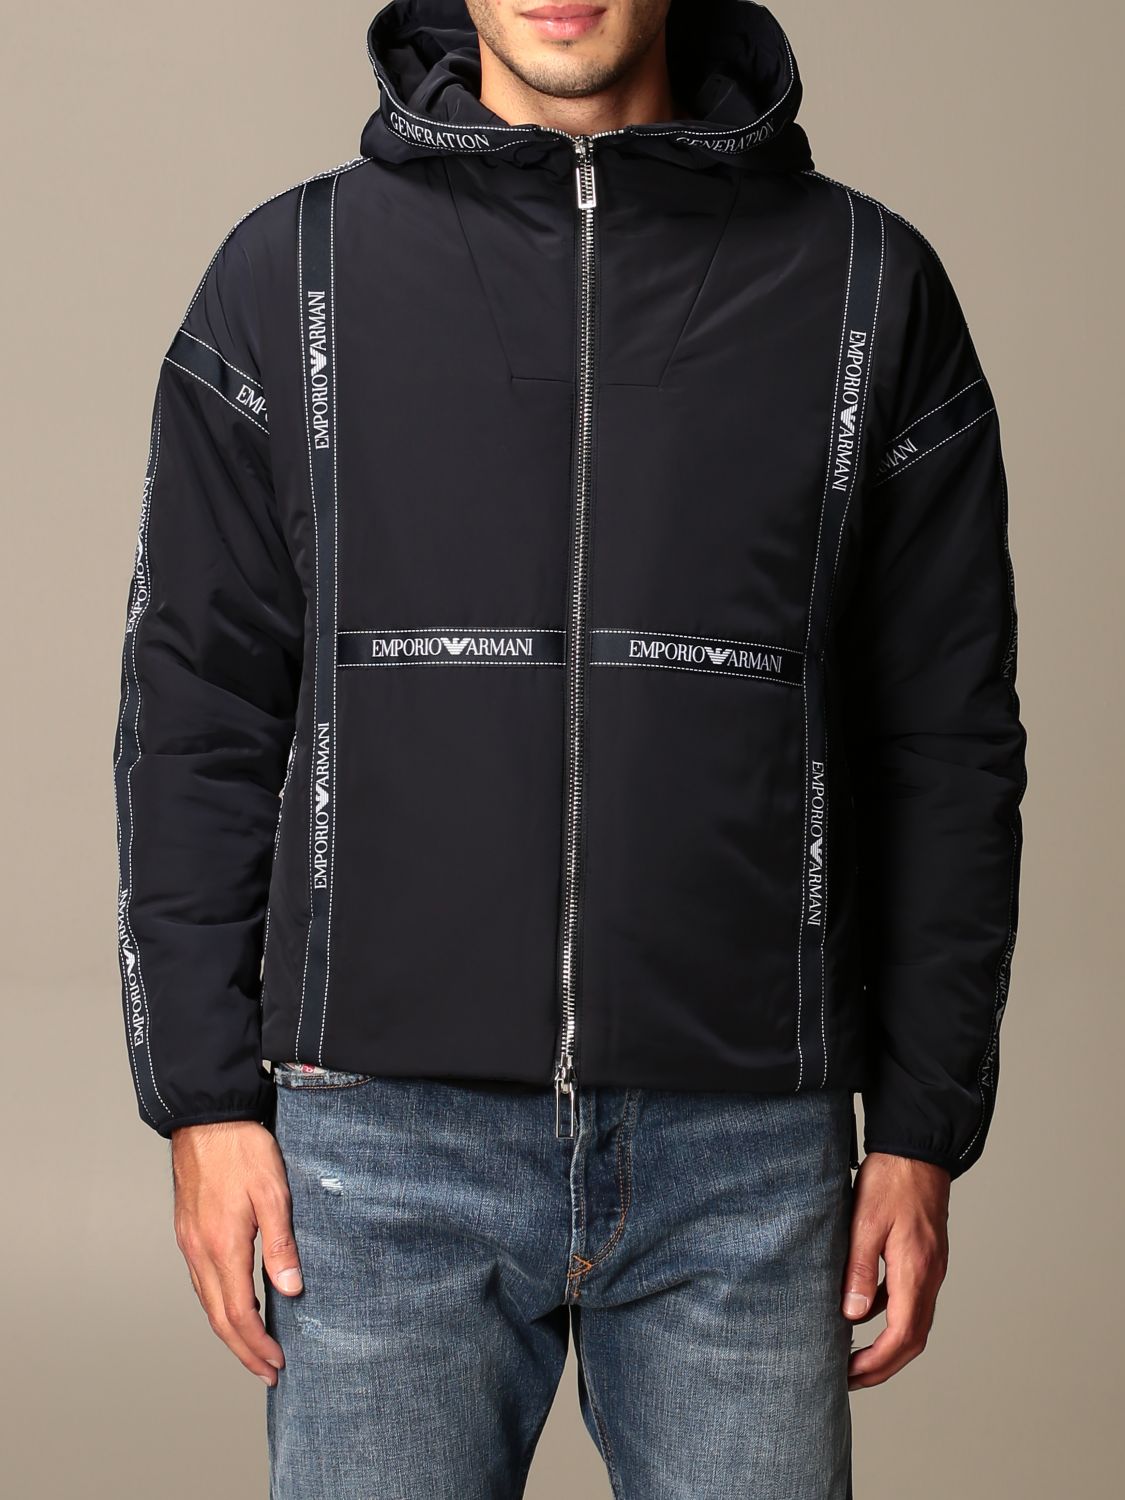 Emporio Armani Outlet: jacket for men - Blue | Emporio Armani jacket 6H1BL0  1NYFZ online on 